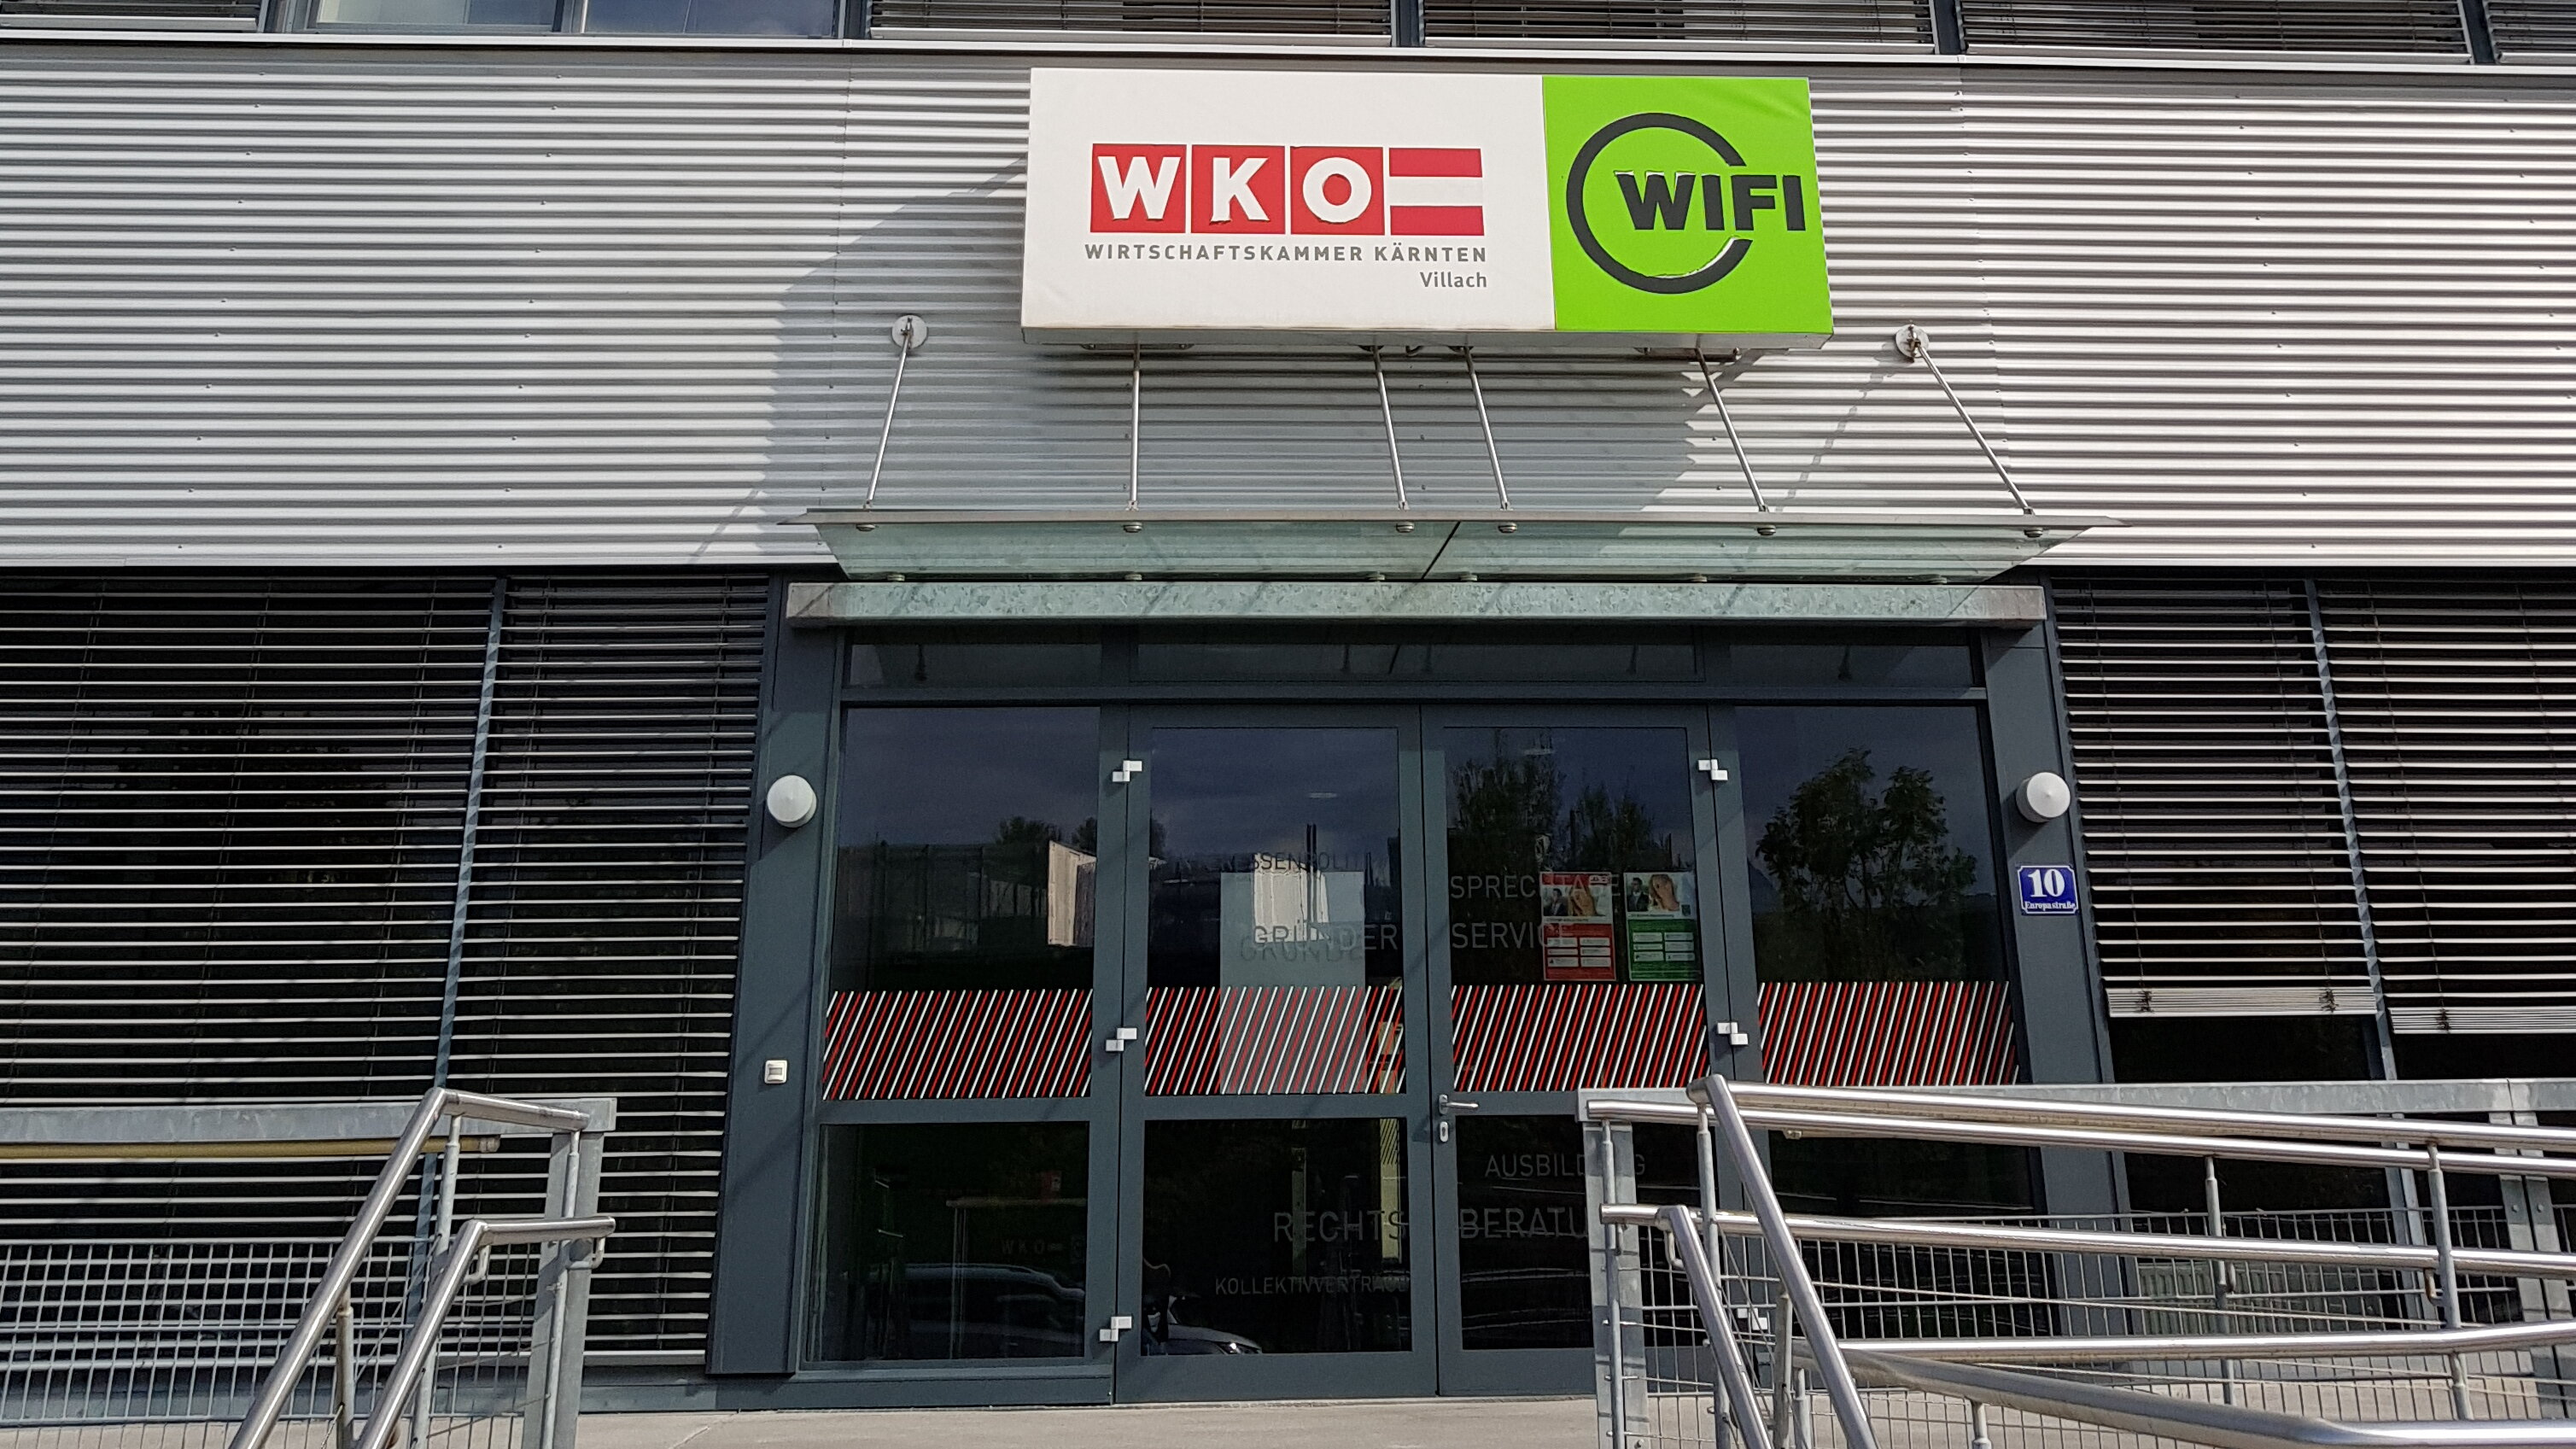 Main entrance WKO/Wifi